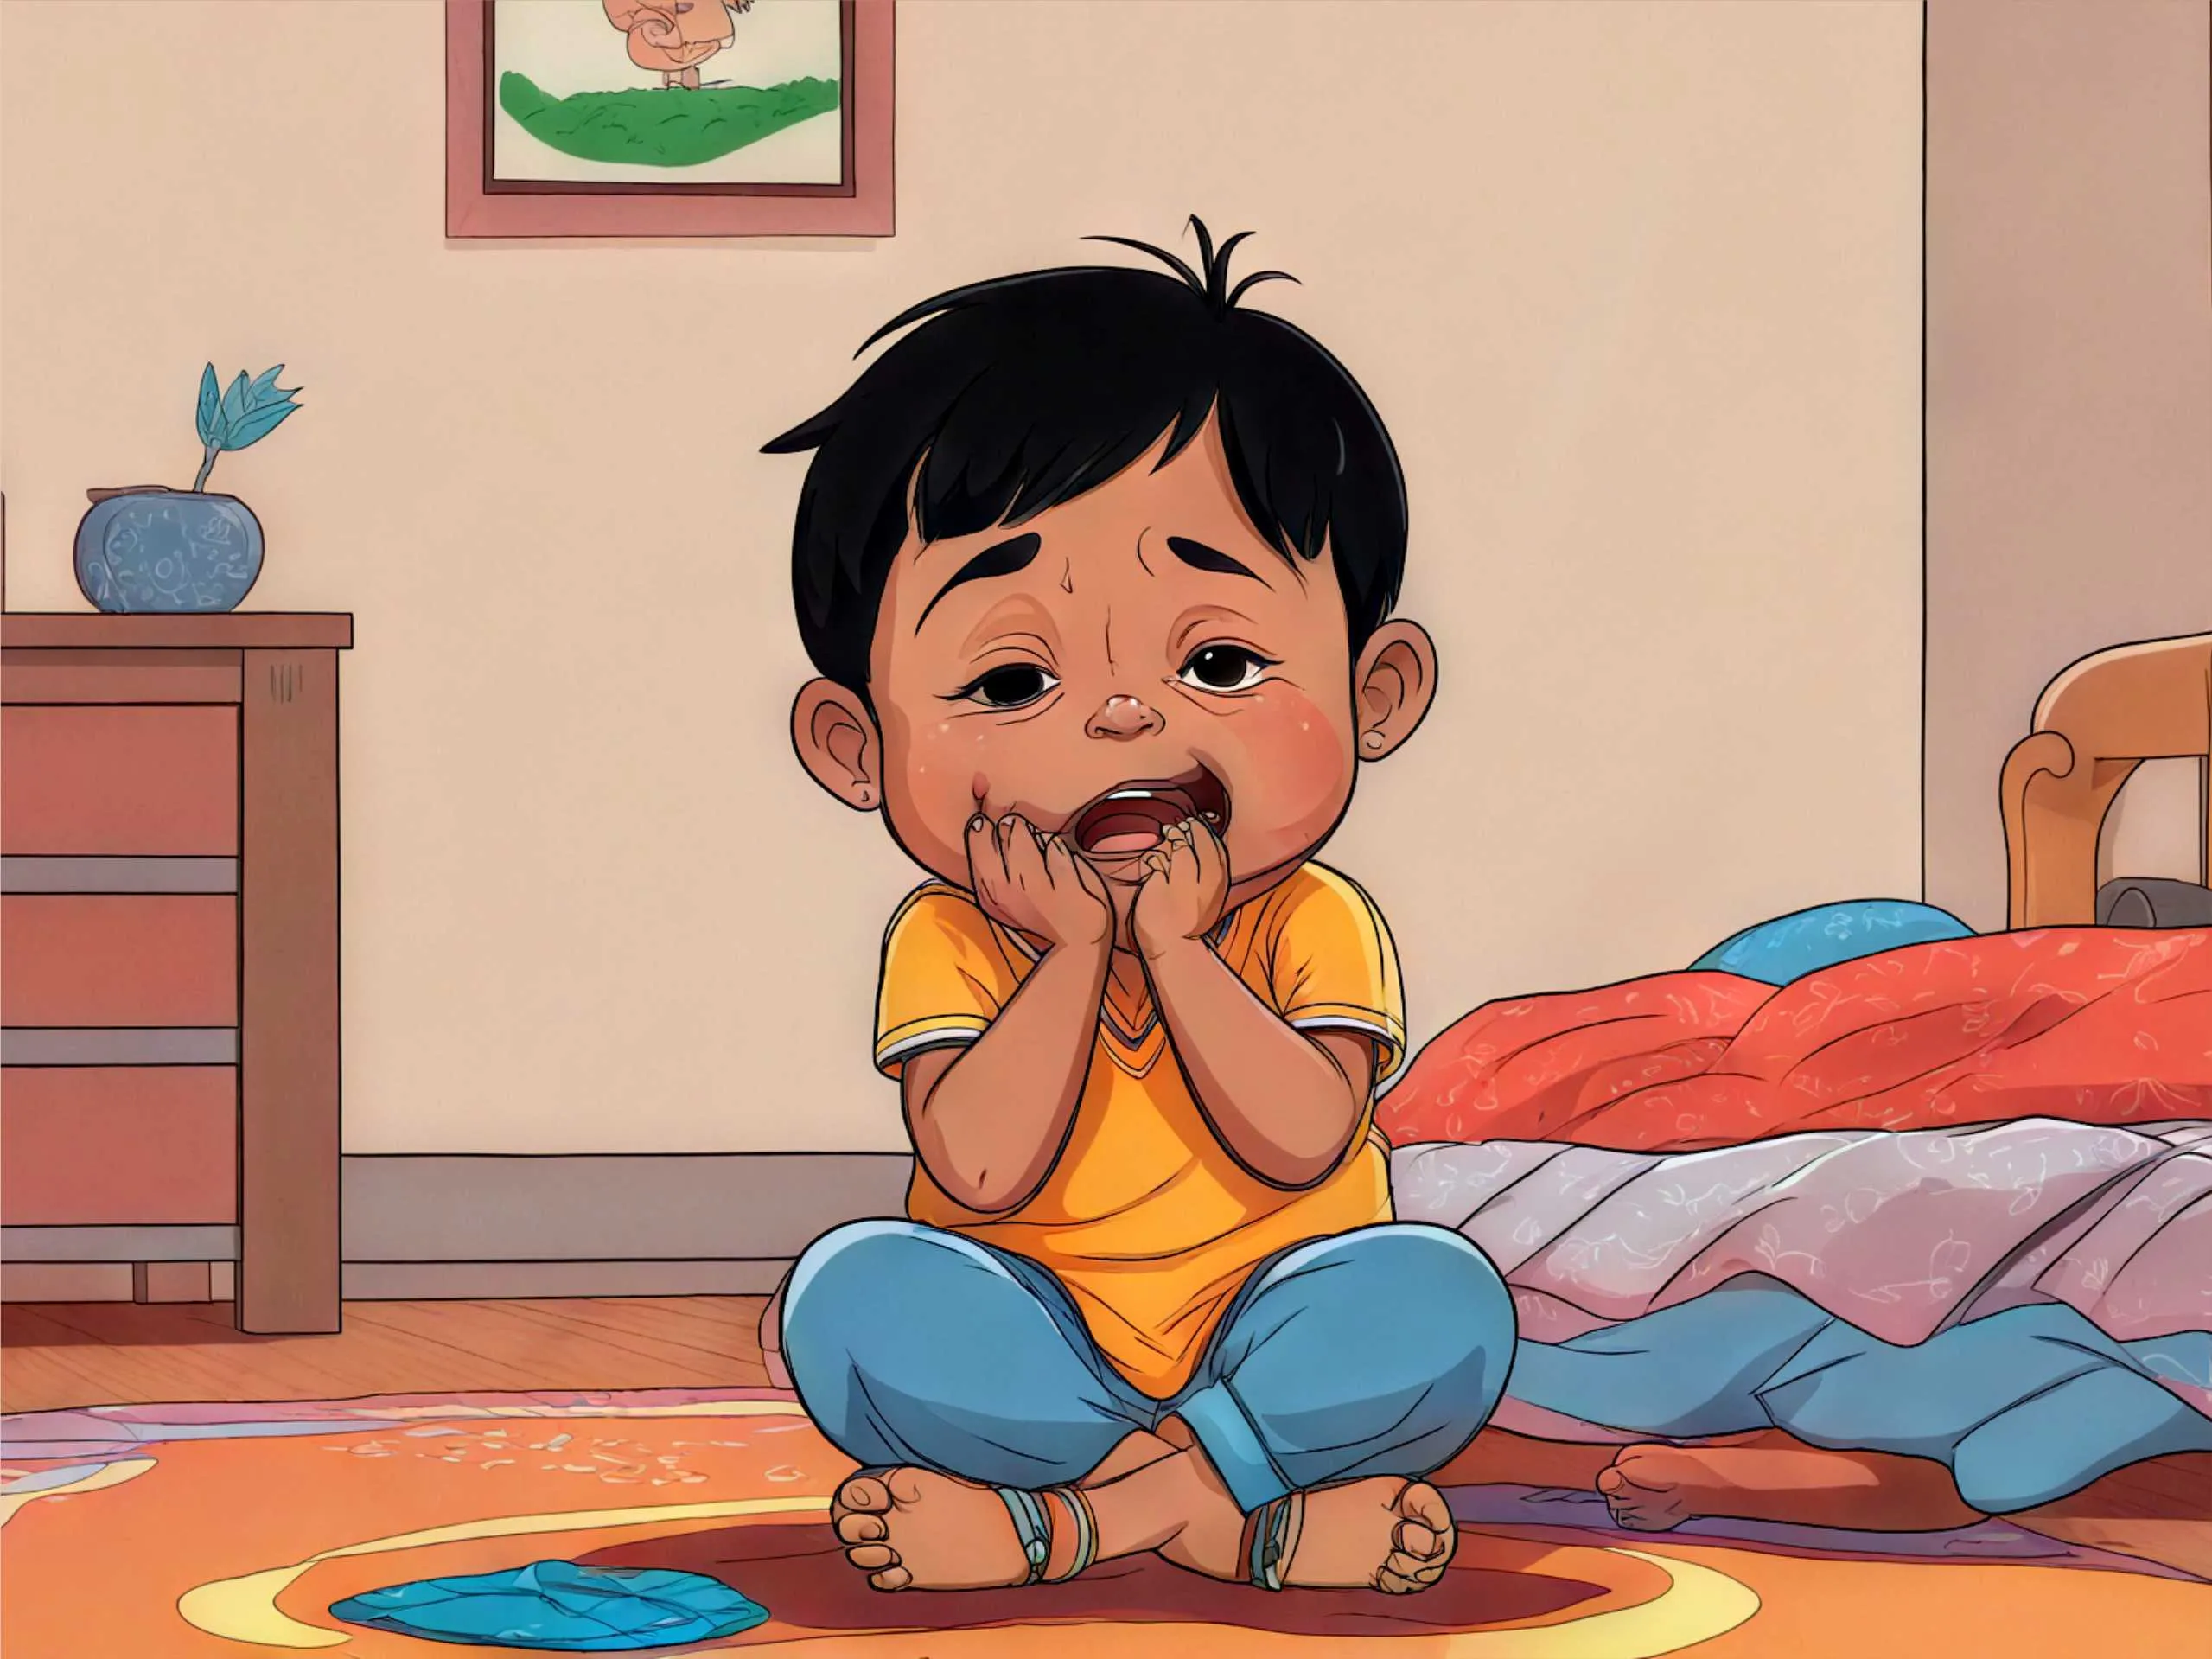 Cartoon image of a kid crying